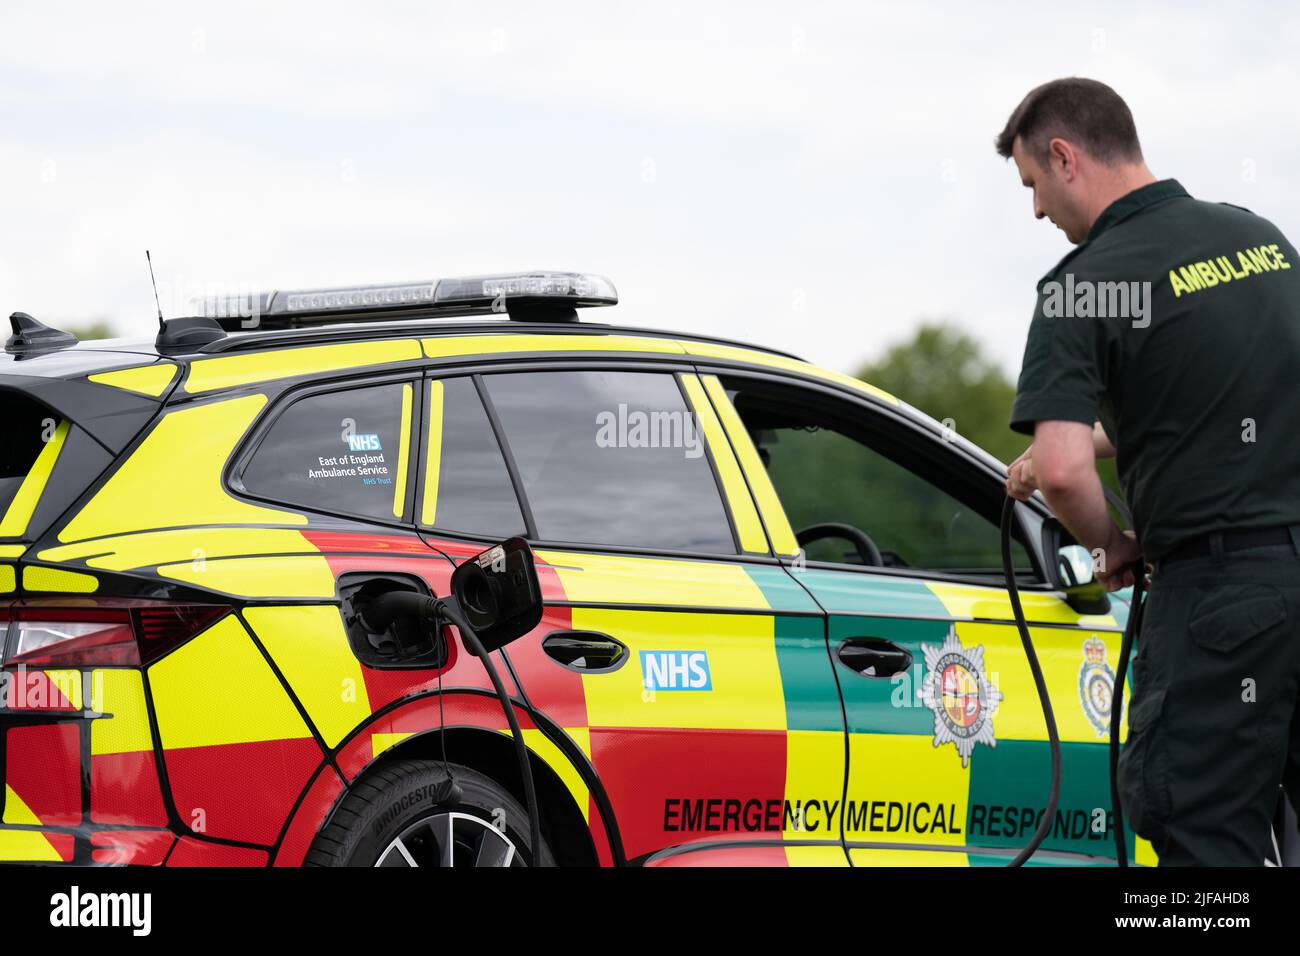 Skoda ambulance vehicles hi-res stock photography and images - Alamy